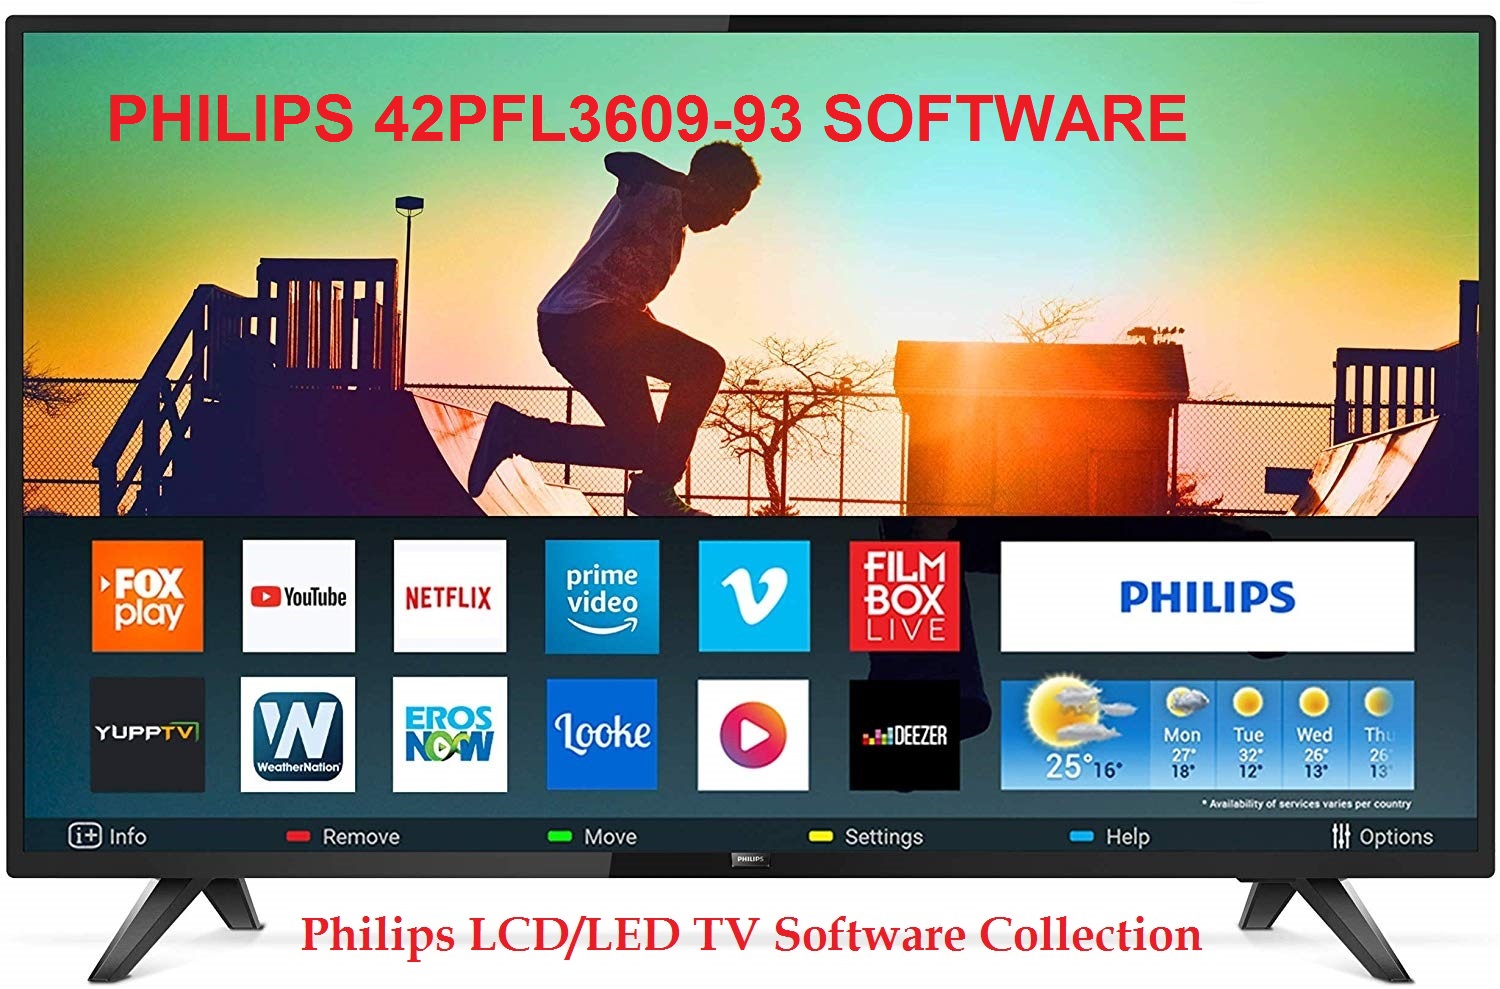 Philips 42Pfl3609-93